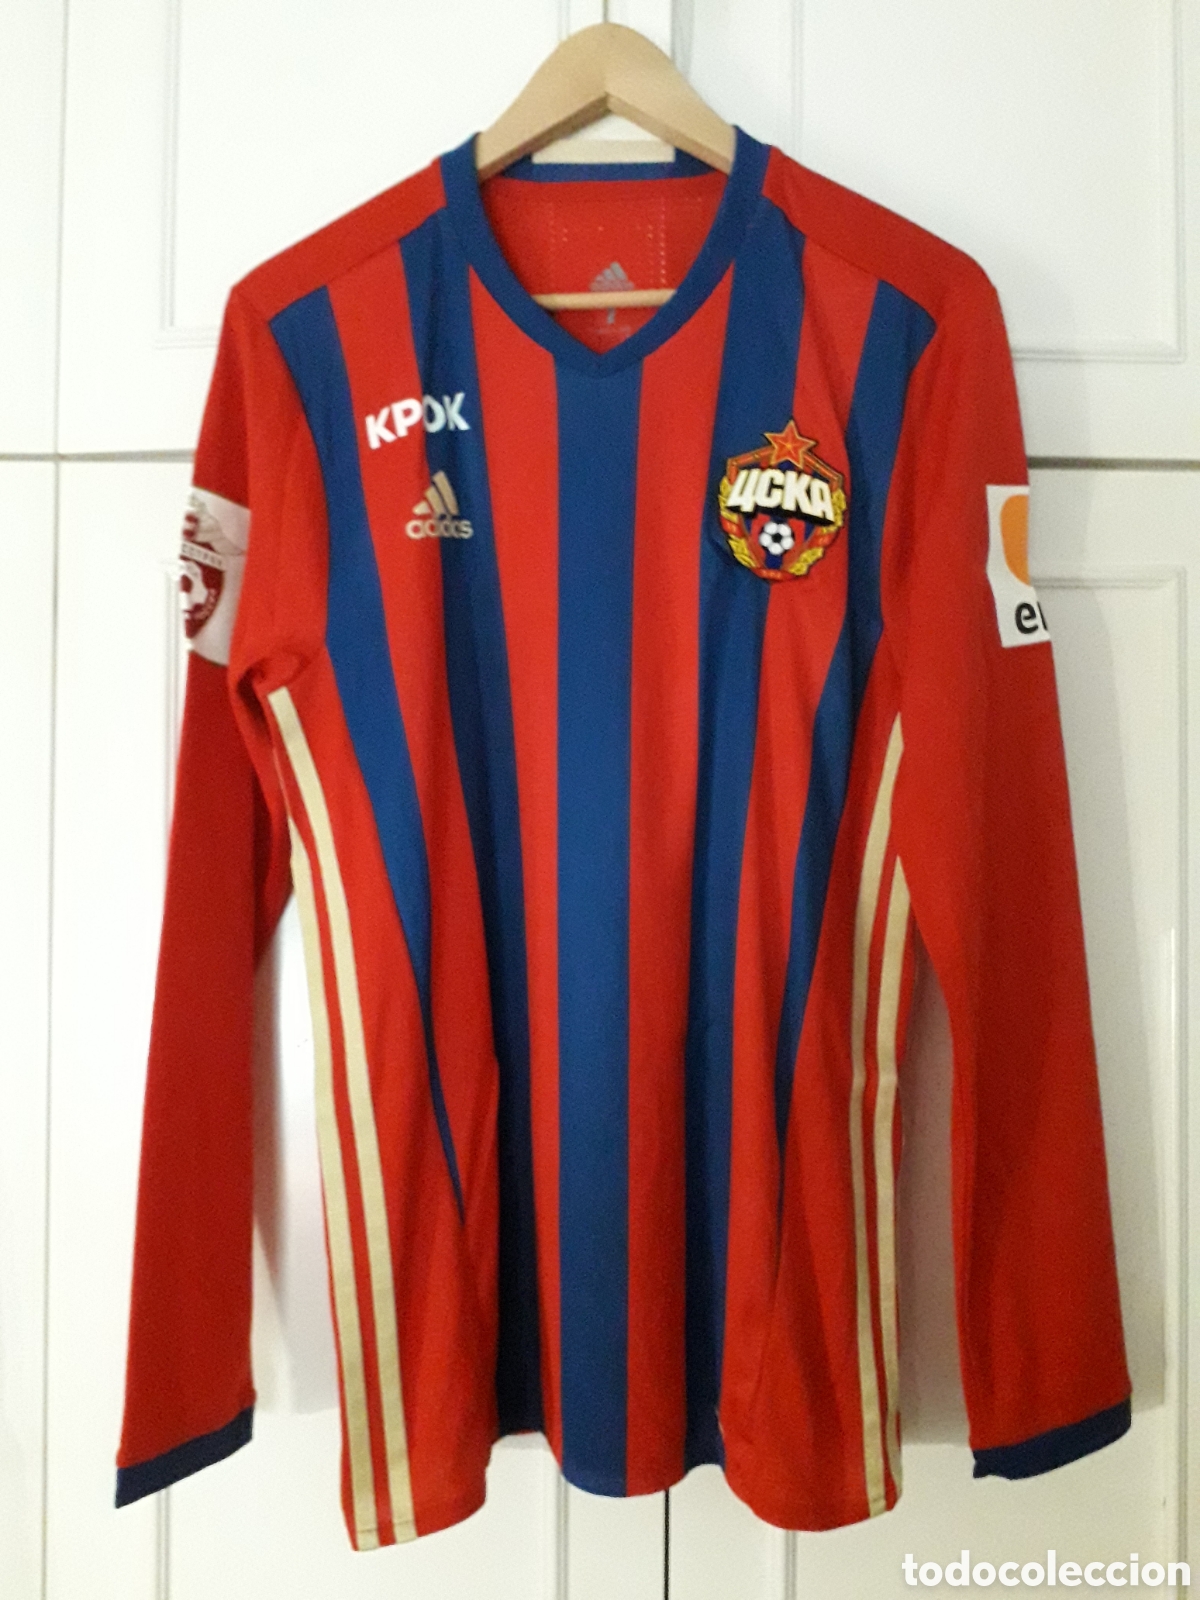 Molestia Seguro cisne camiseta matchworn fc cska moscú de rusia - Buy Football T-Shirts on  todocoleccion